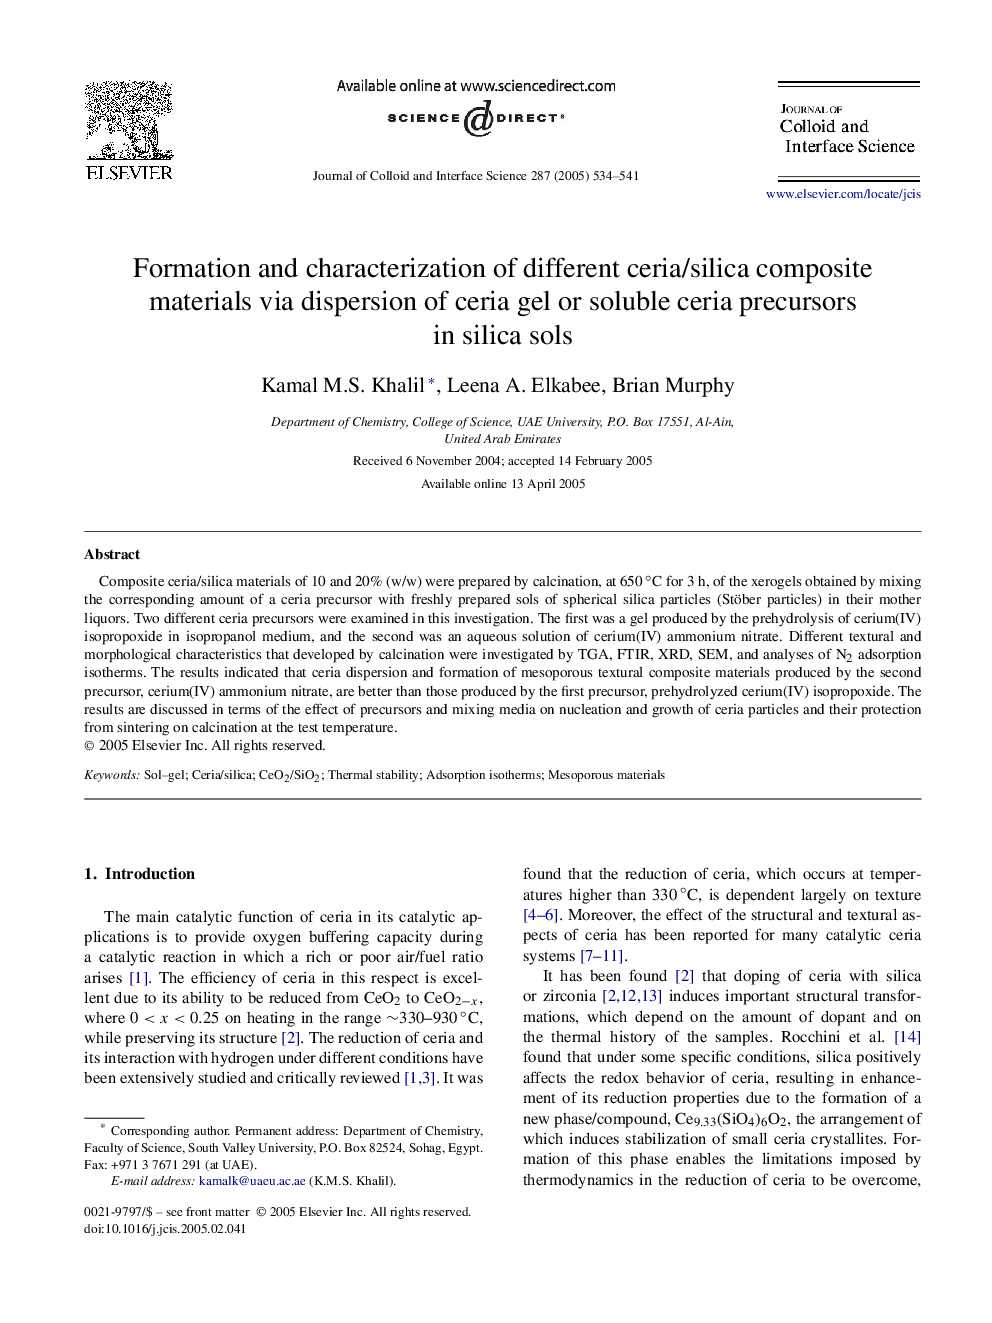 Formation and characterization of different ceria/silica composite materials via dispersion of ceria gel or soluble ceria precursors in silica sols